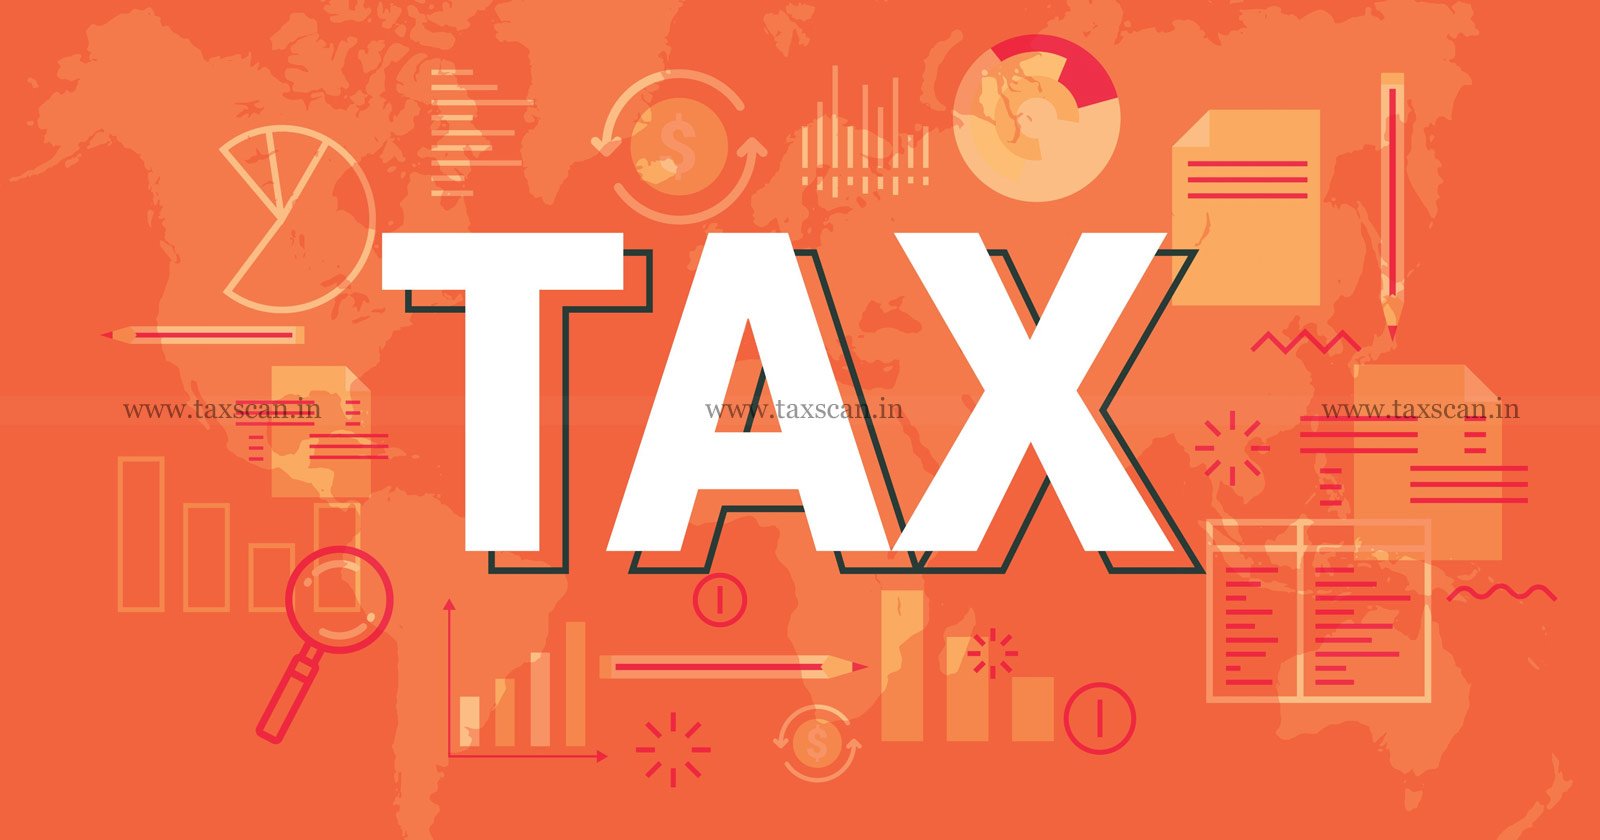 Treating - Deposit - CESTAT - Service - Tax - Payment - TAXSCAN